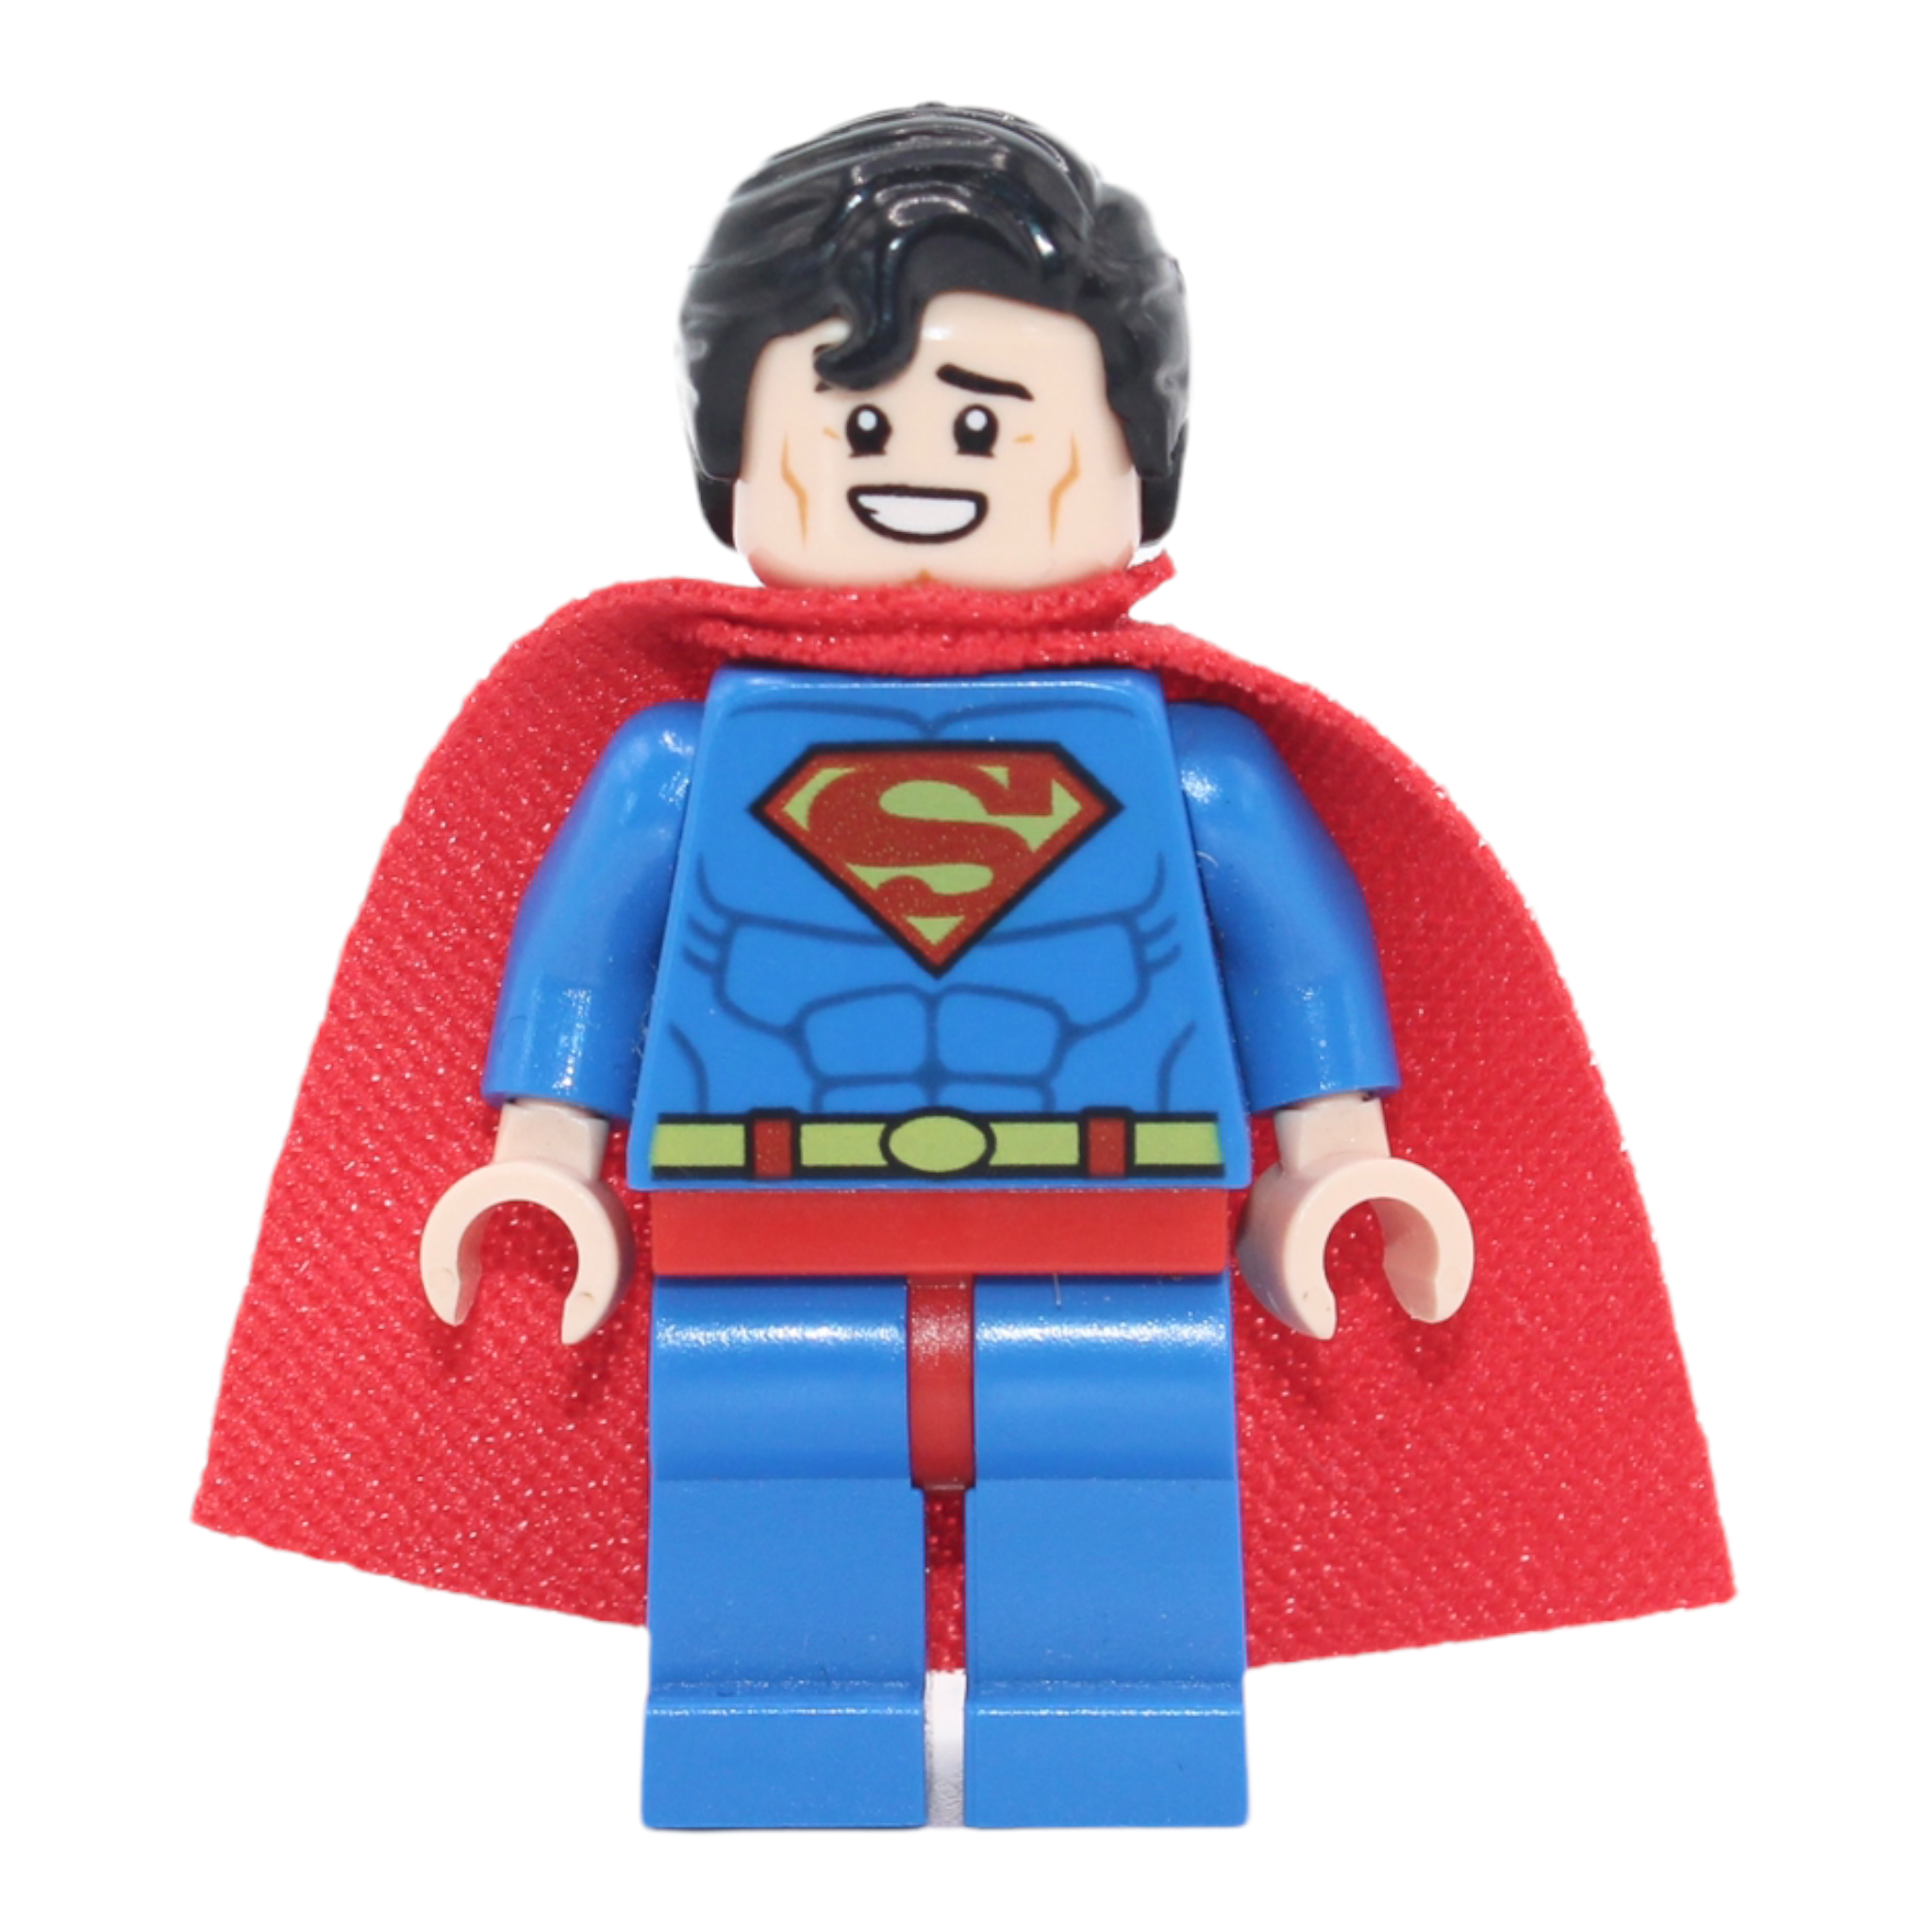 Superman (LEGO Batman Movie, broad grin)